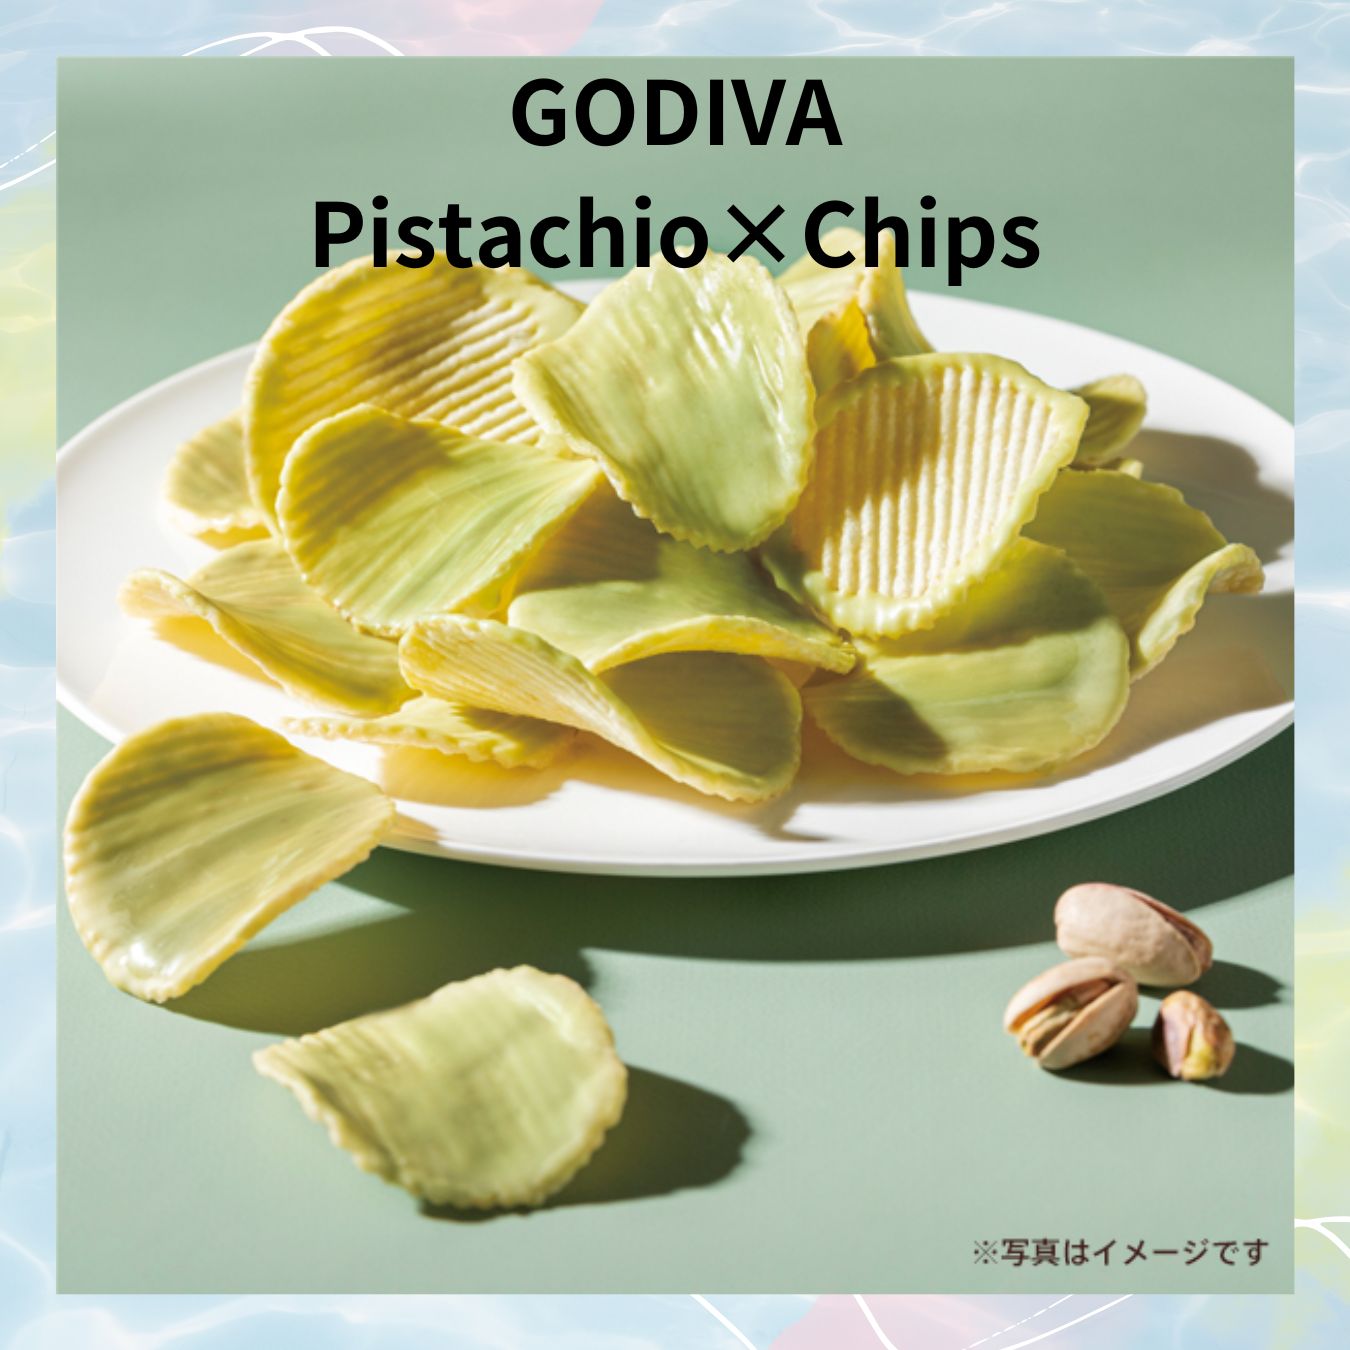 GODIVA Chocolate Japan (Pistachio × Chips) - JapanHapiness